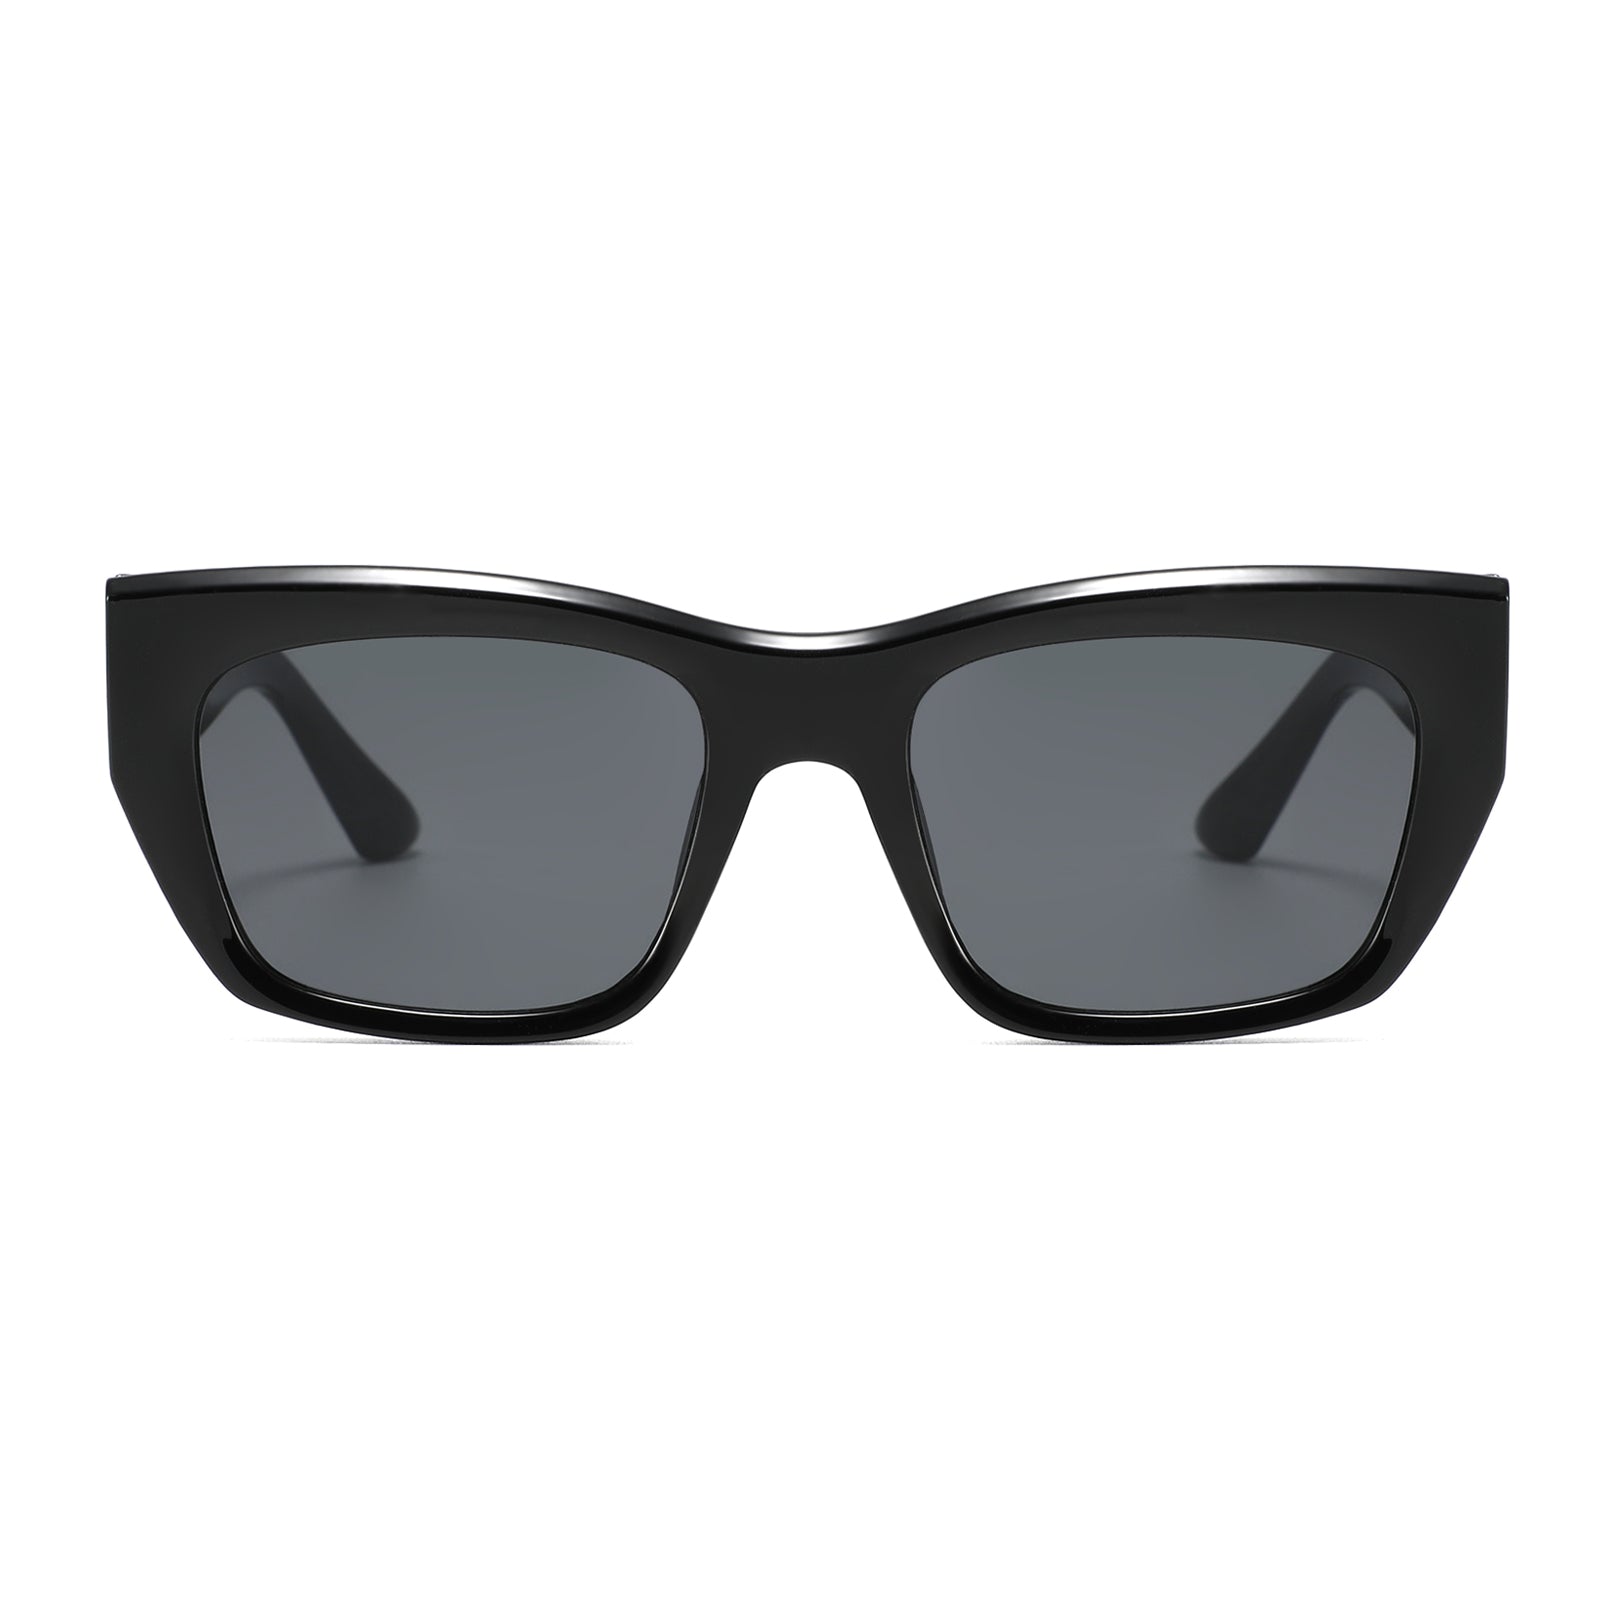 Horizon Black Sunglasses